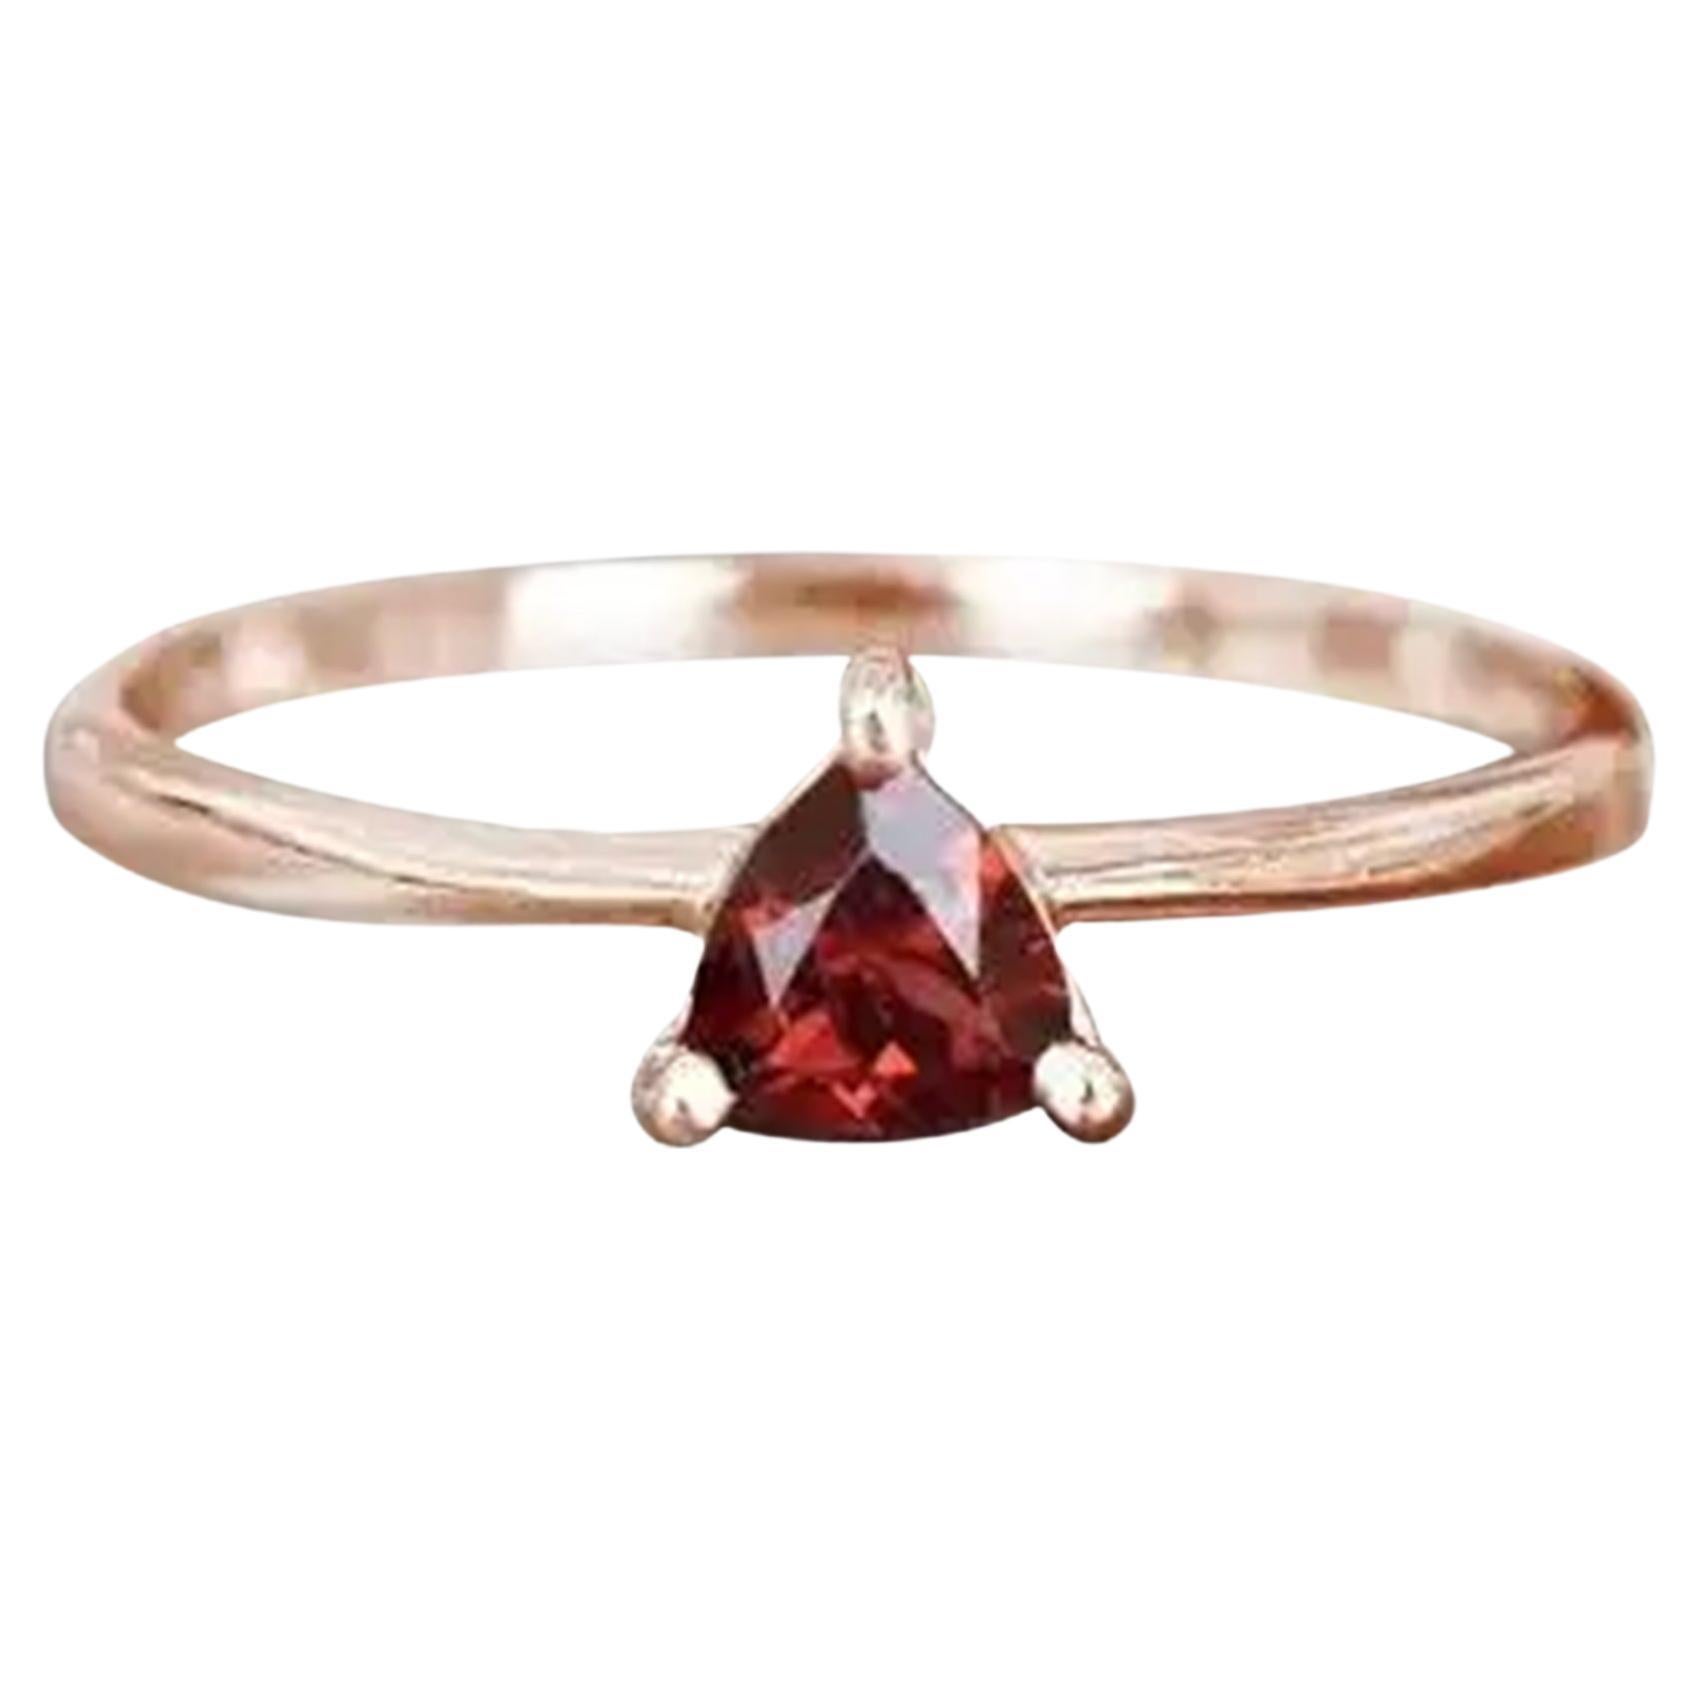 For Sale:  14k Gold Trillion Gemstone 6 mm Trillion Gemstone Engagement Ring Stackable Ring